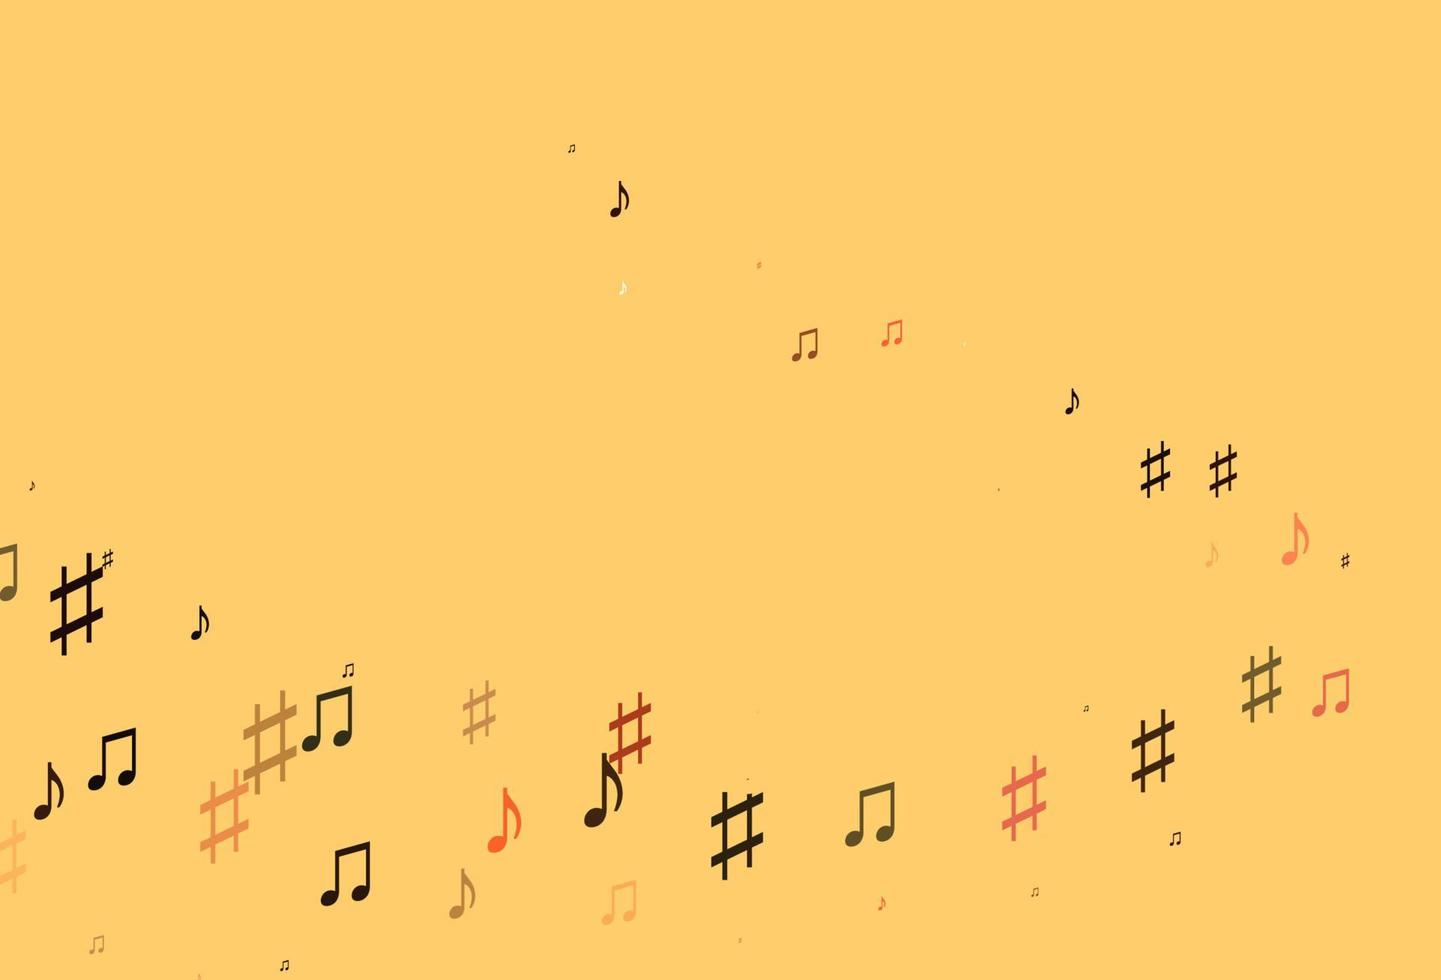 Light Orange vector background with music symbols.